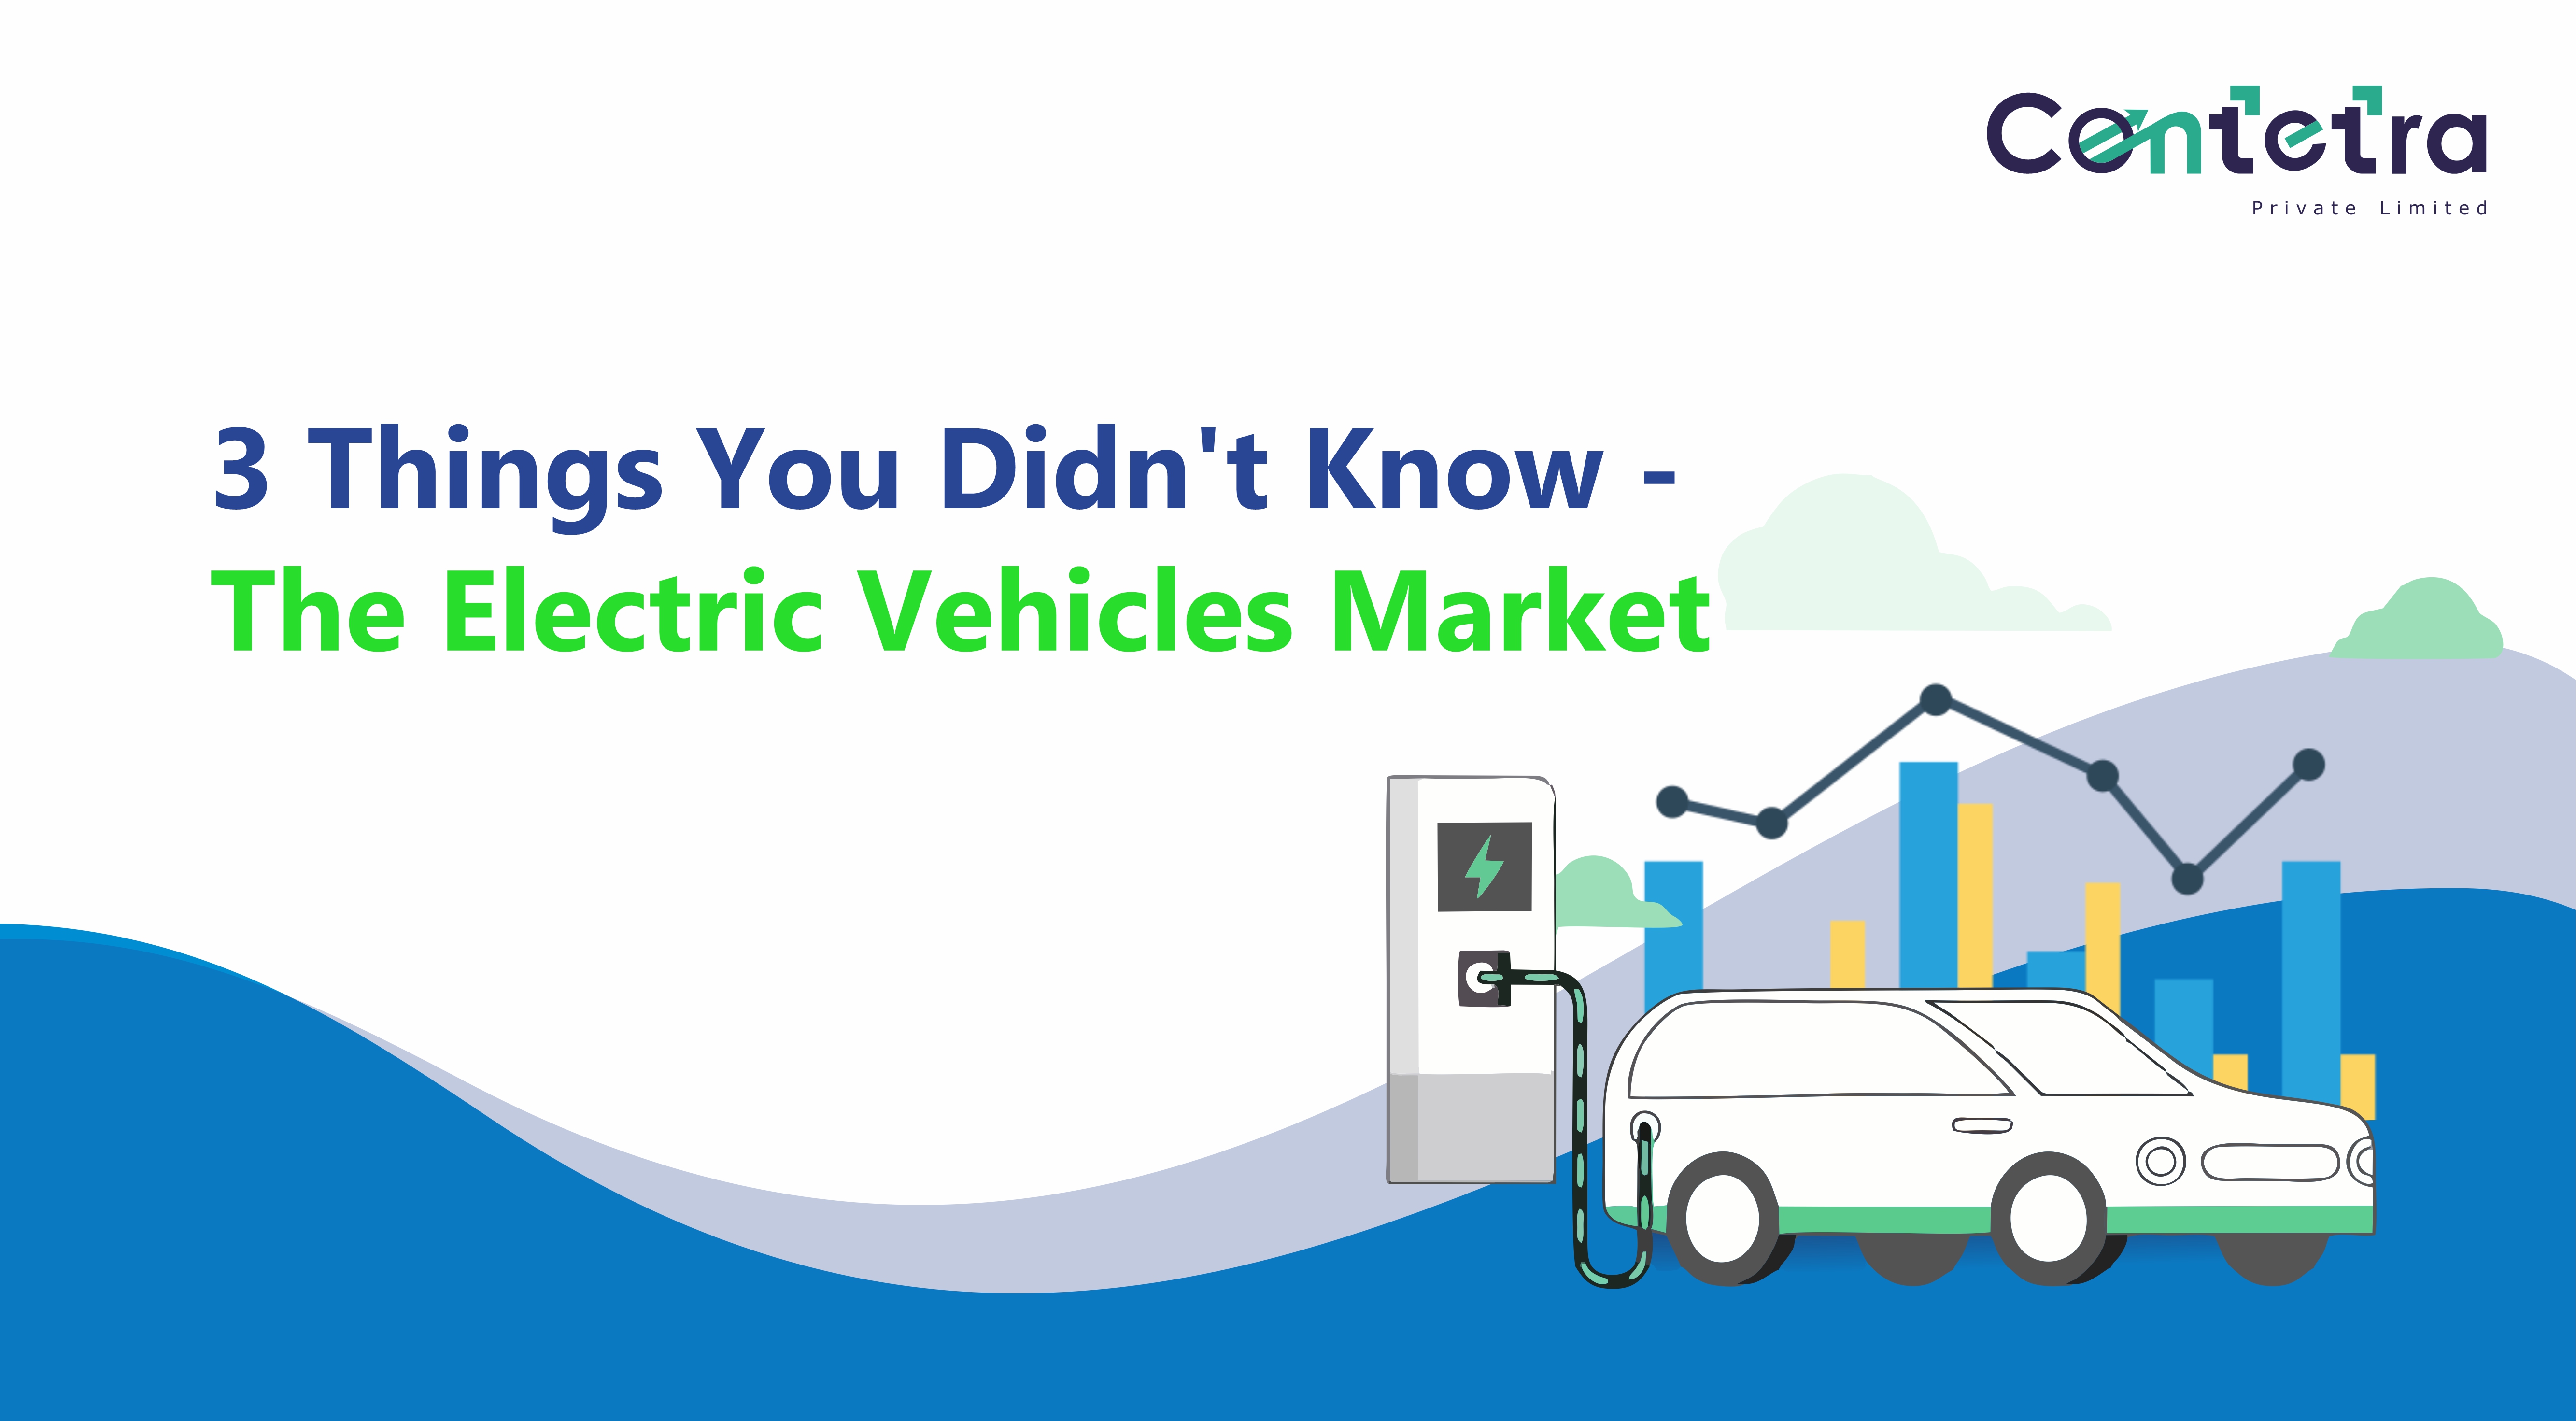 Electric Vehicles market